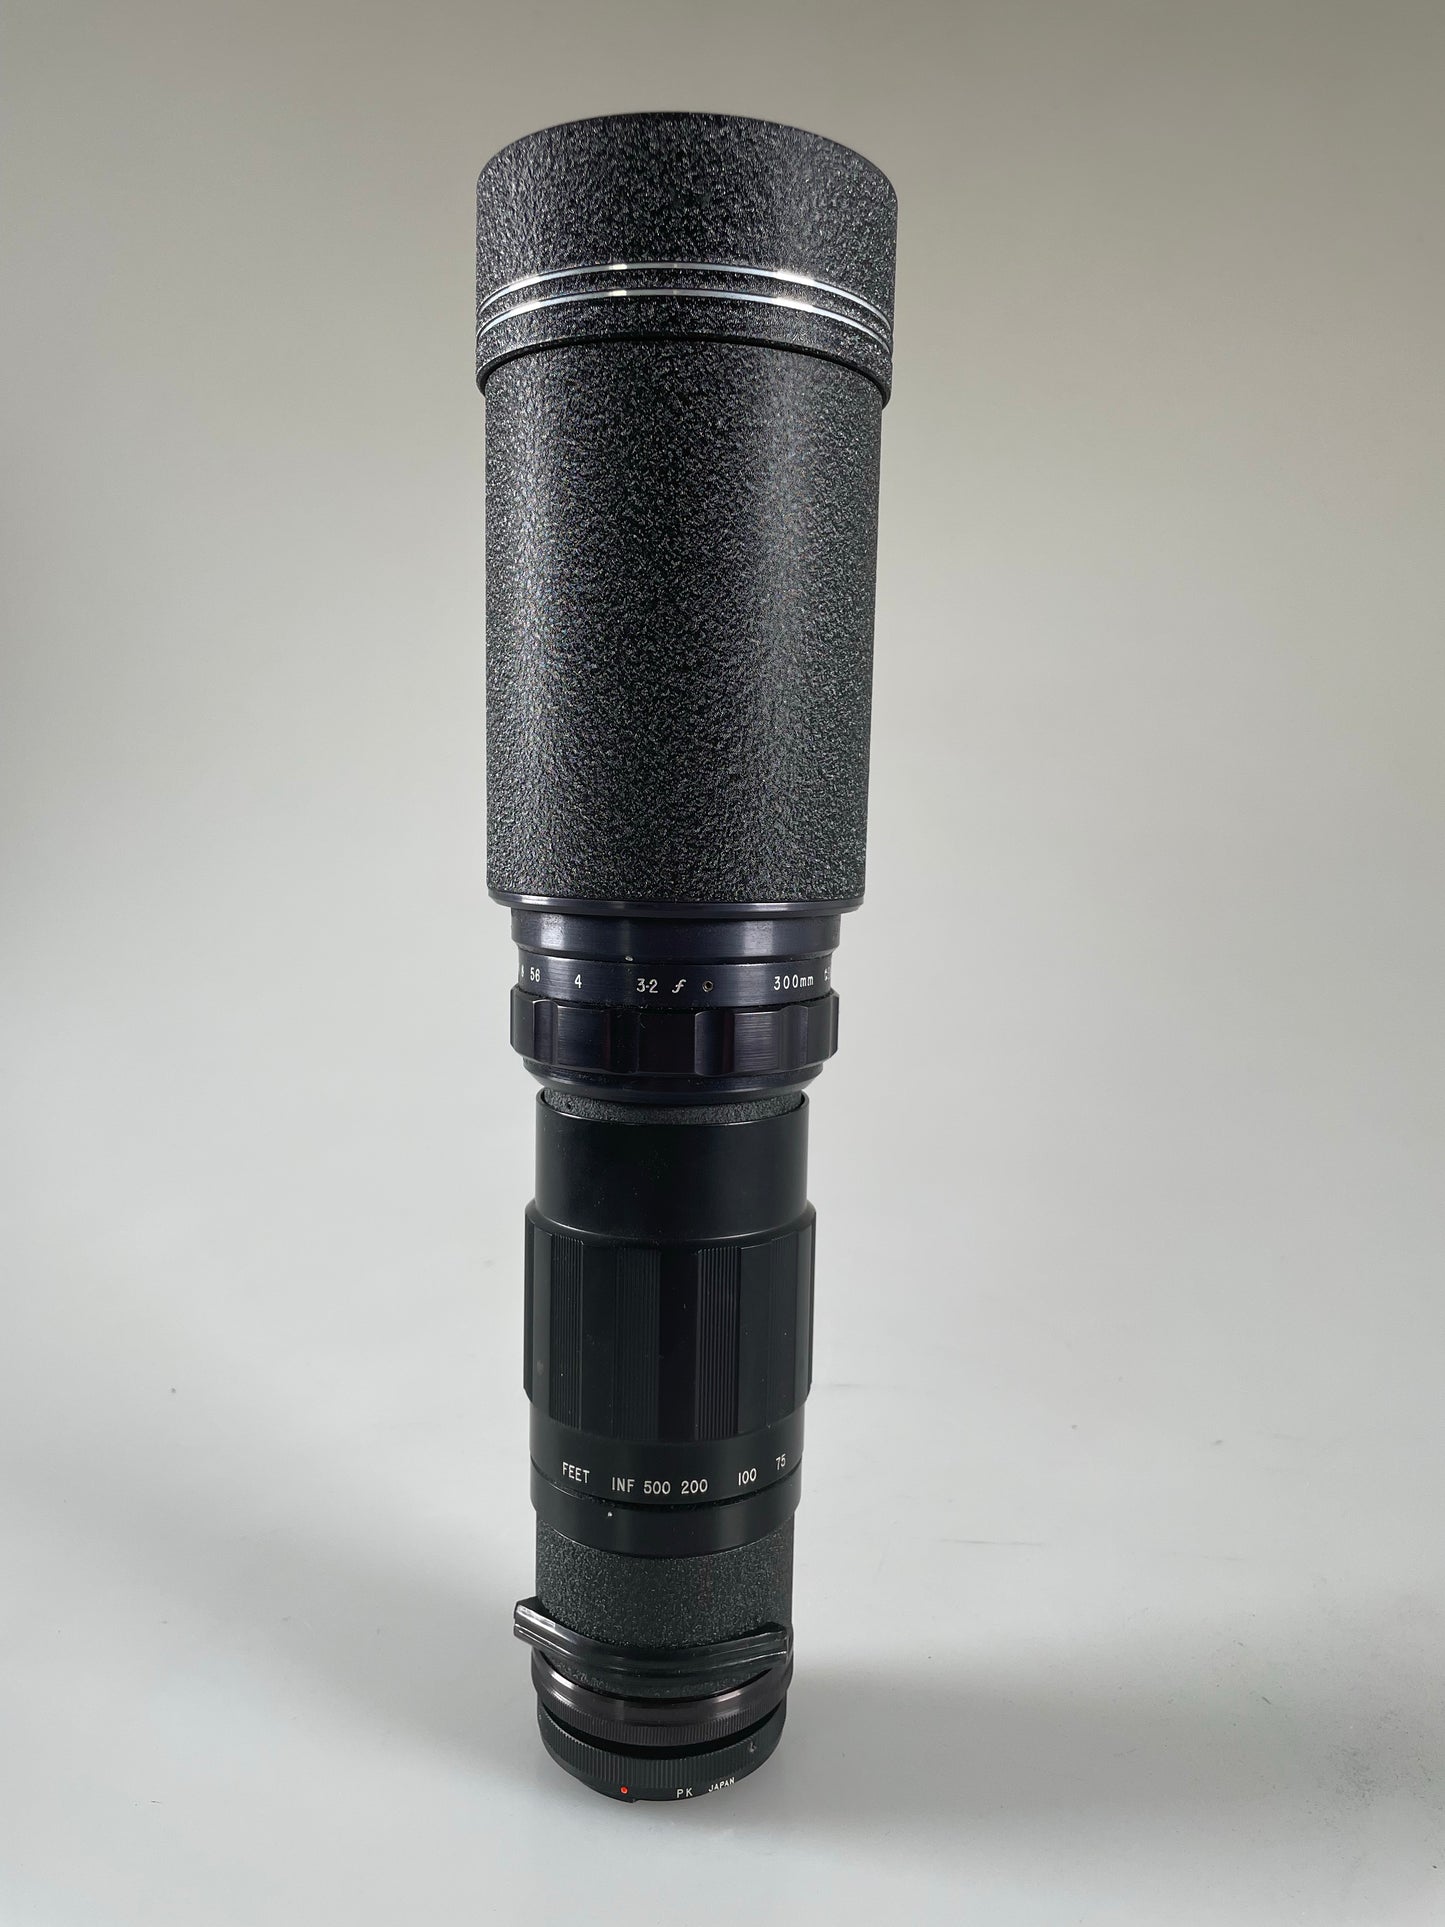 Century 300mm f3.2 Tele-Athenar II telephoto lens RARE